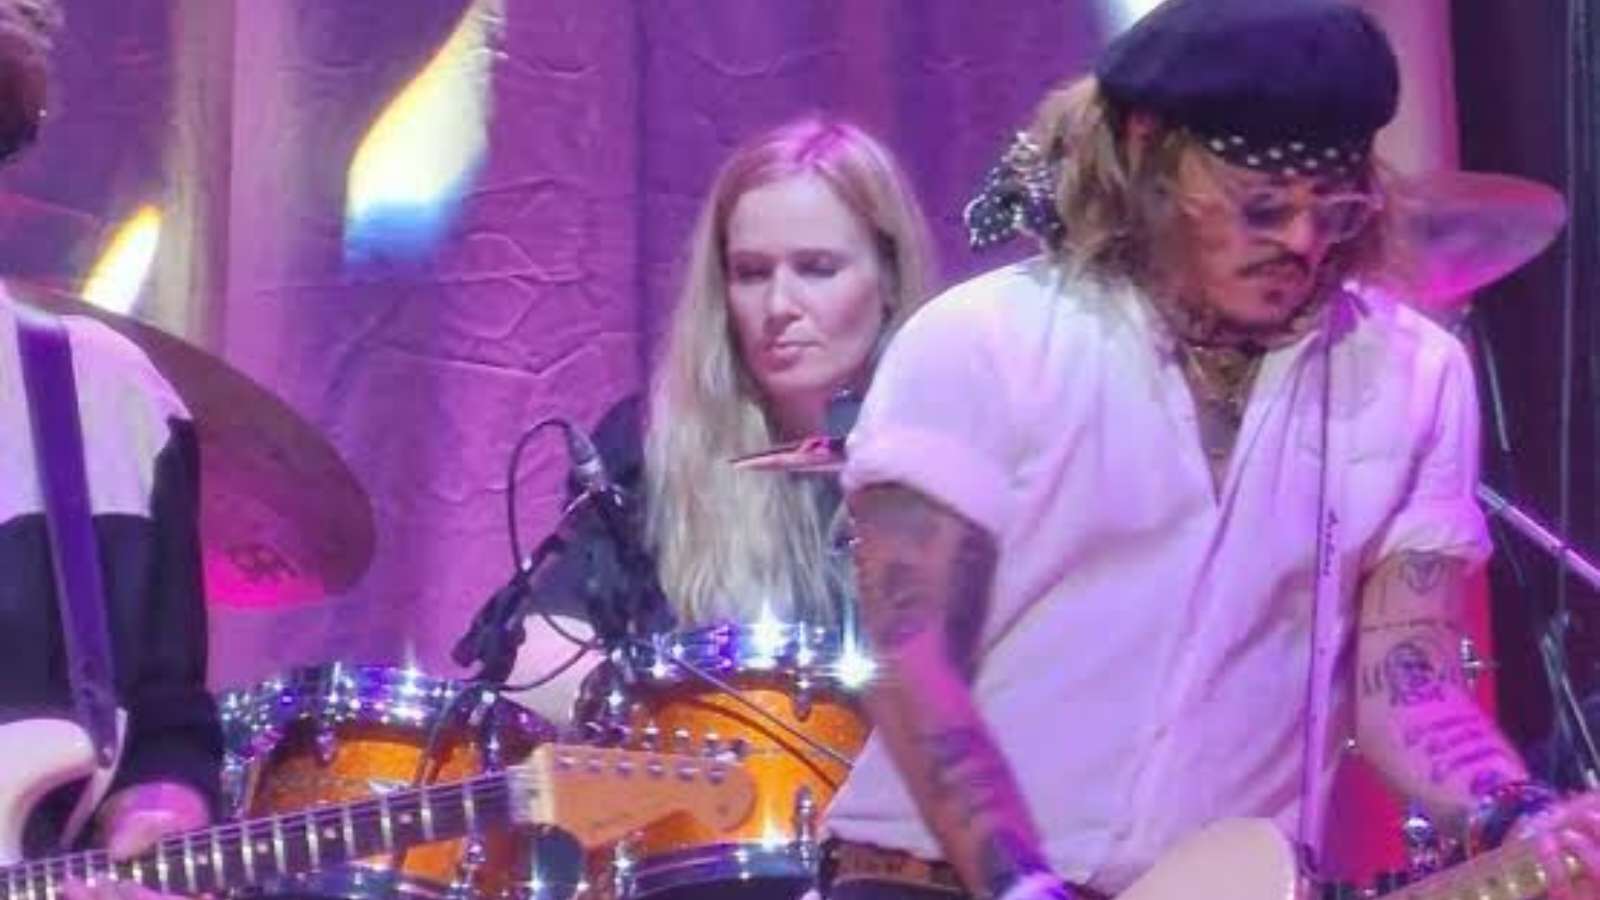 Johnny Depp surprised the fans at Jeff Beck's concert in the U.K.